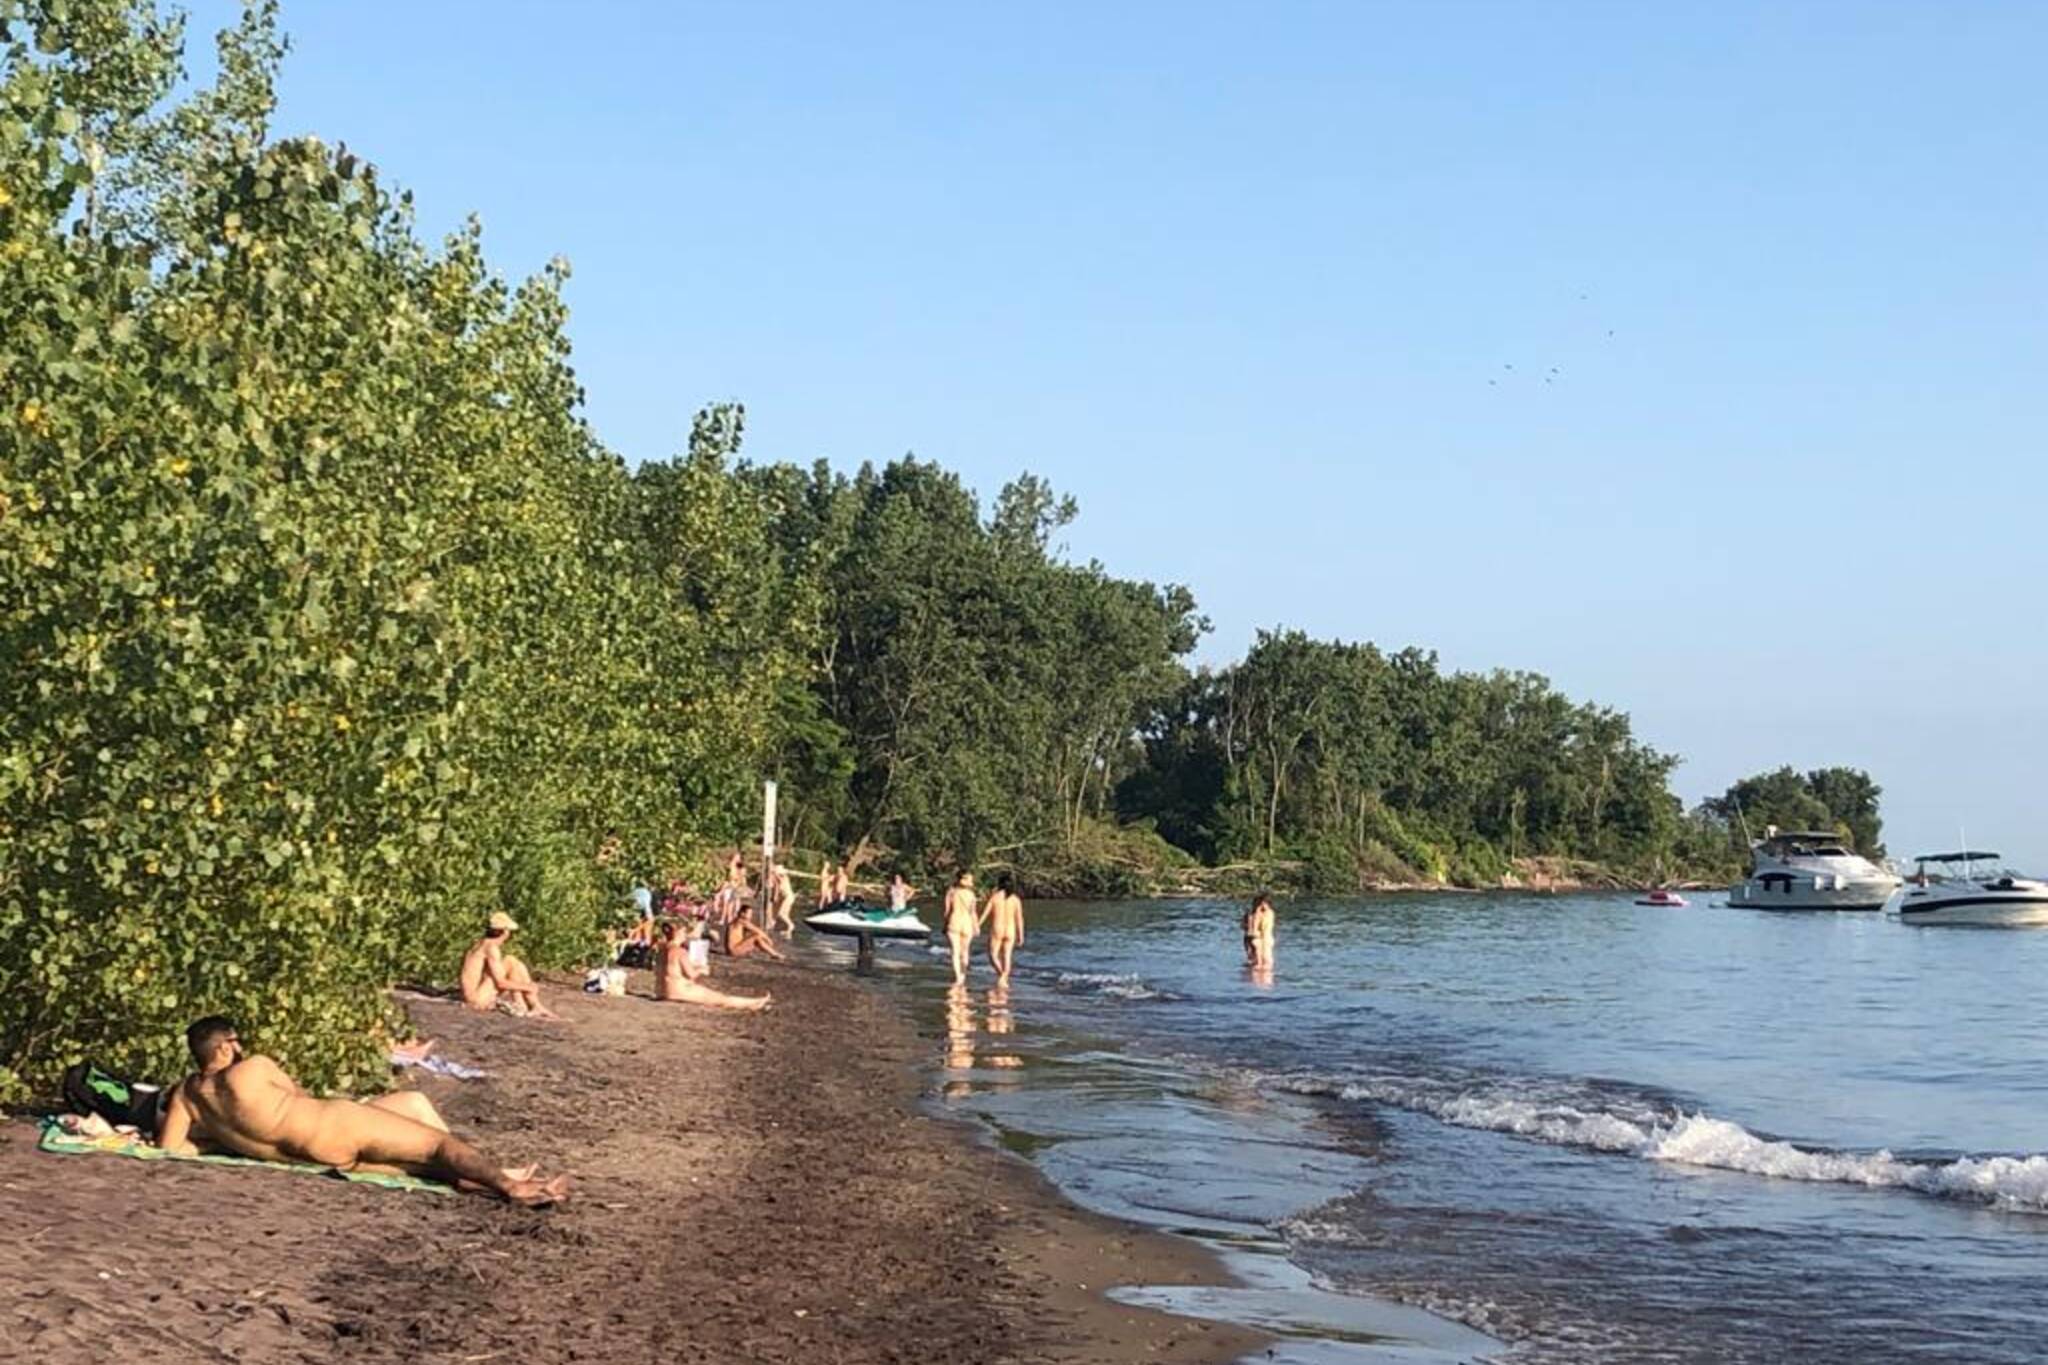 Night Beach Nude - Hanlan's Point is the Toronto Island's famous nude beach